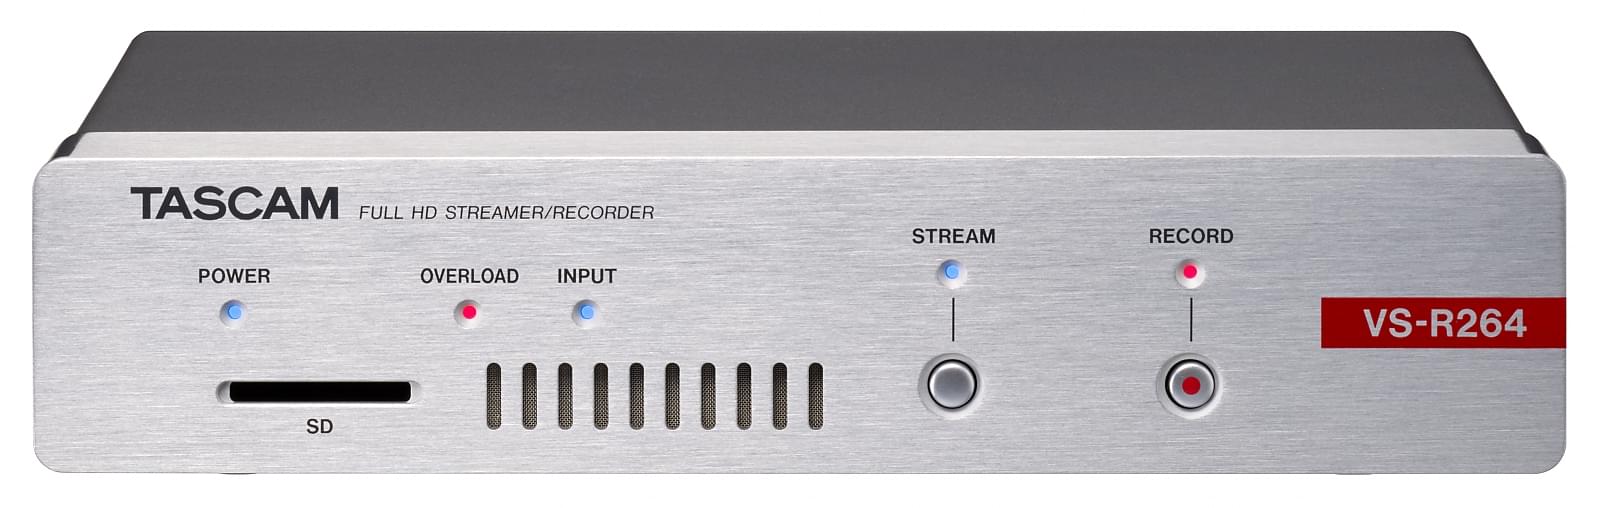 Full HD Video Encoder, Decoder, Streamer and Recorder | Tascam VS-R264